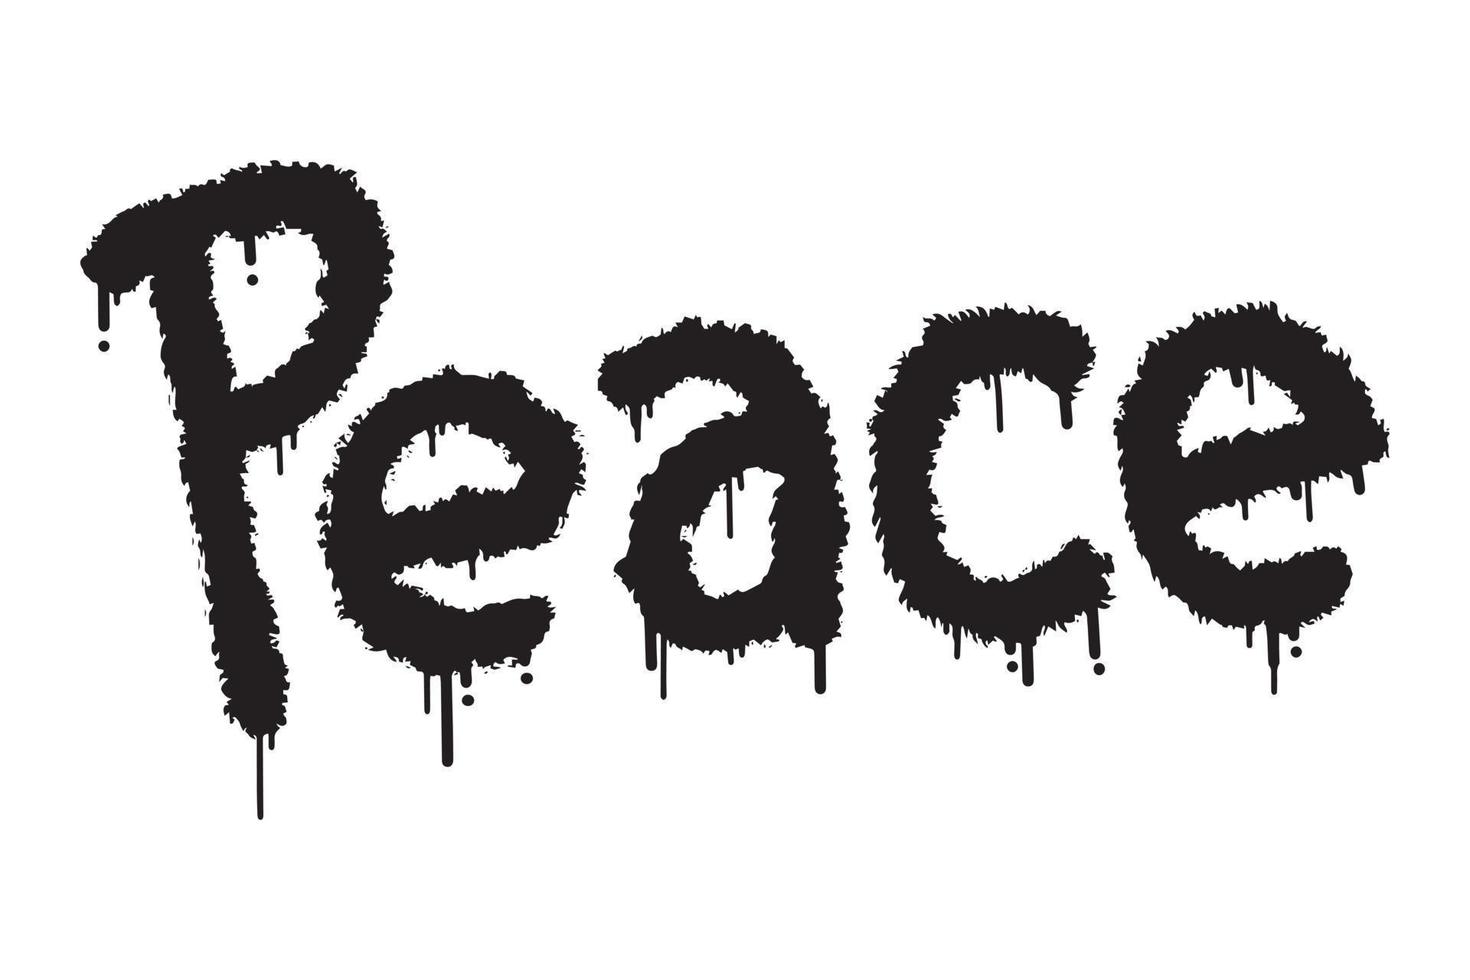 graffiti vrede tekst. vector illustratie.